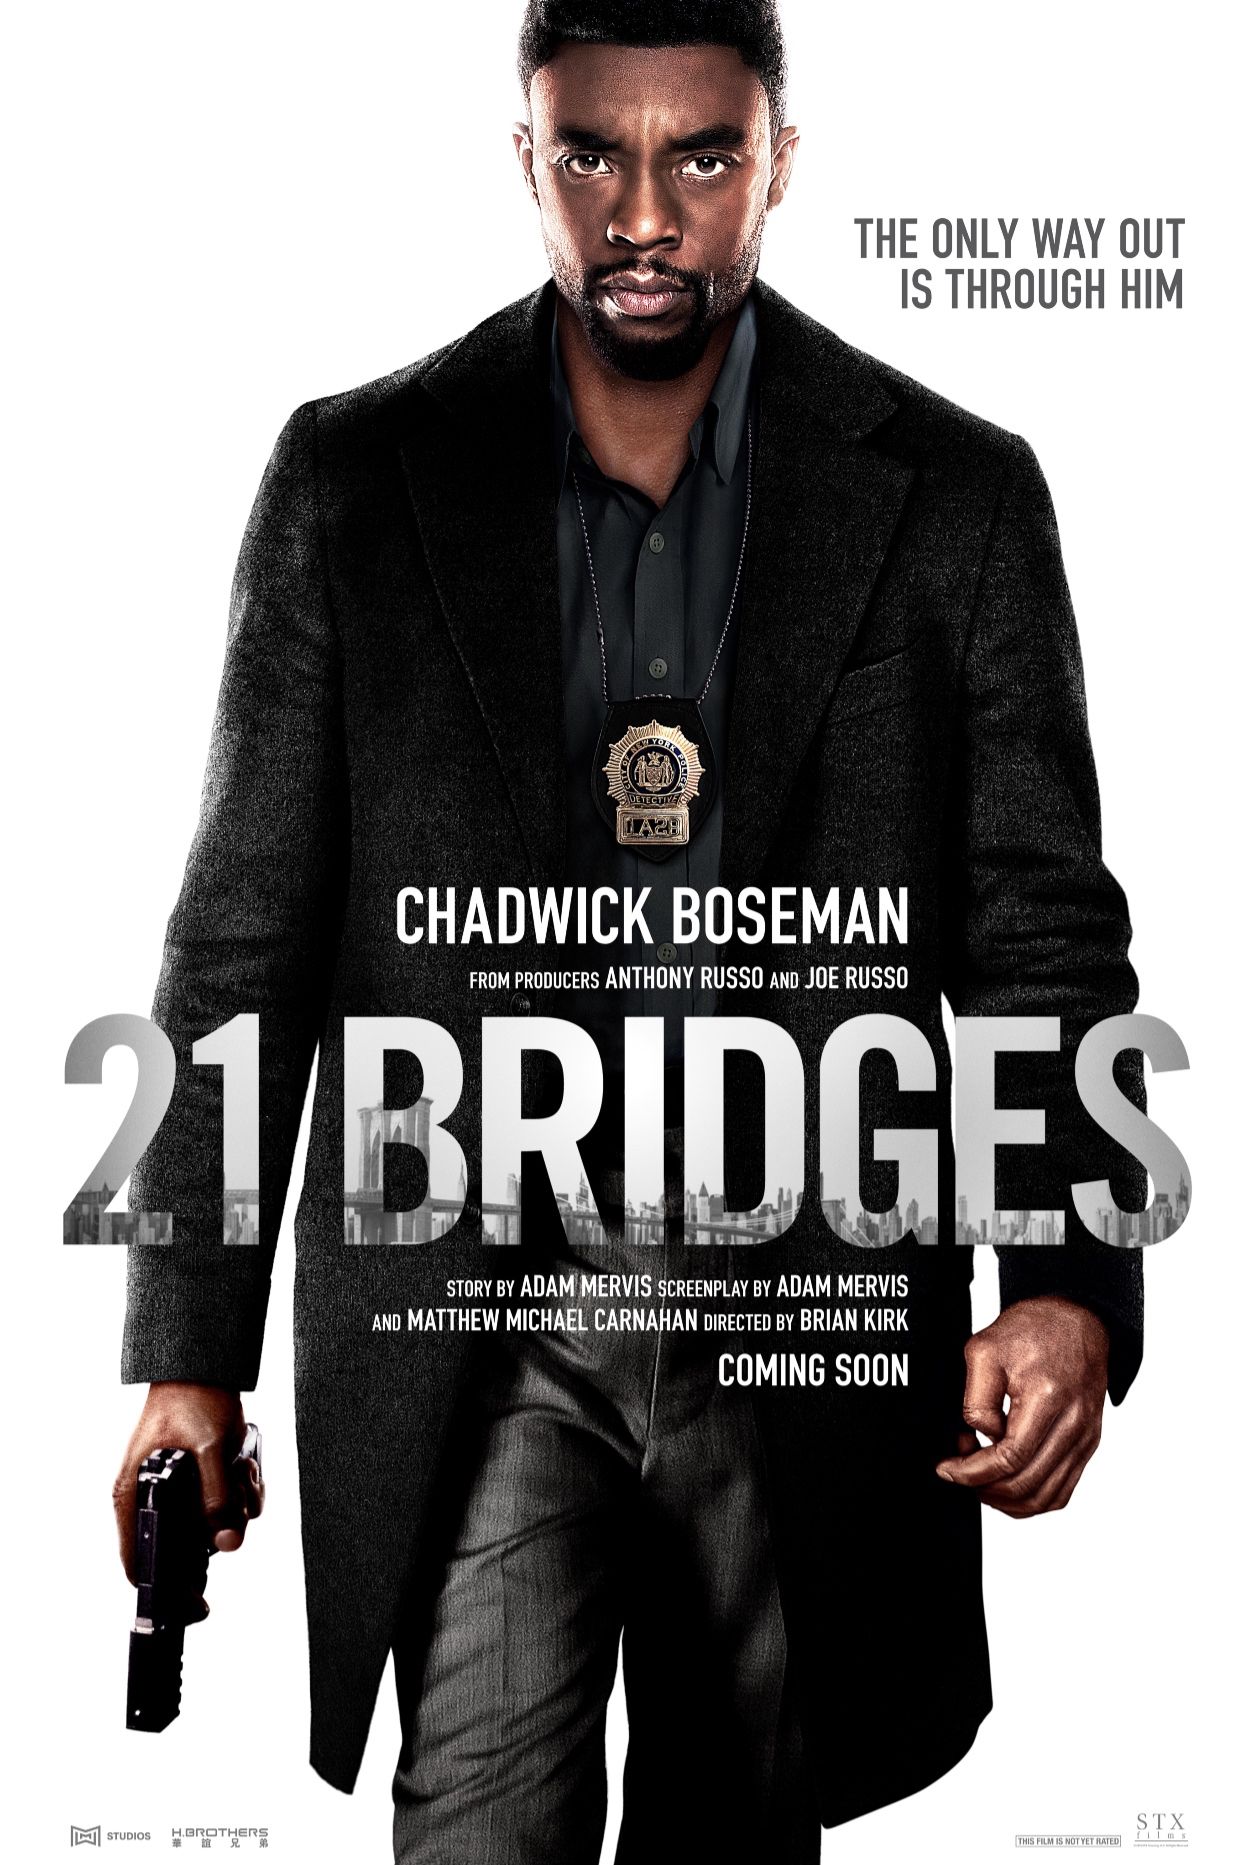 21 Bridges payoff poster